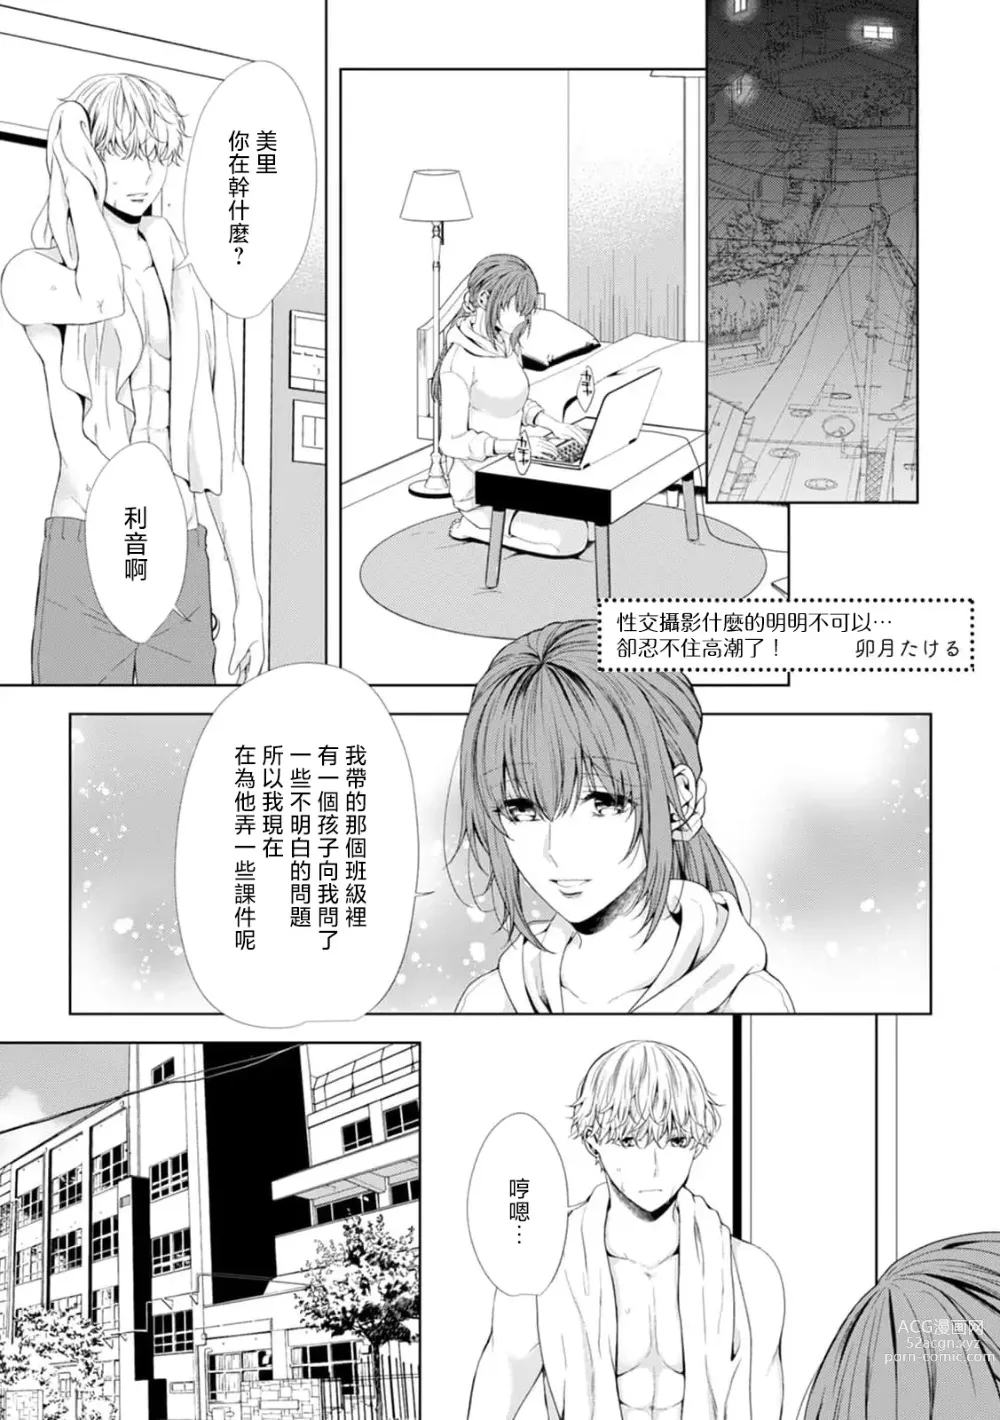 Page 2 of manga 性交摄影什么的明明不可以…却忍不住高潮了！